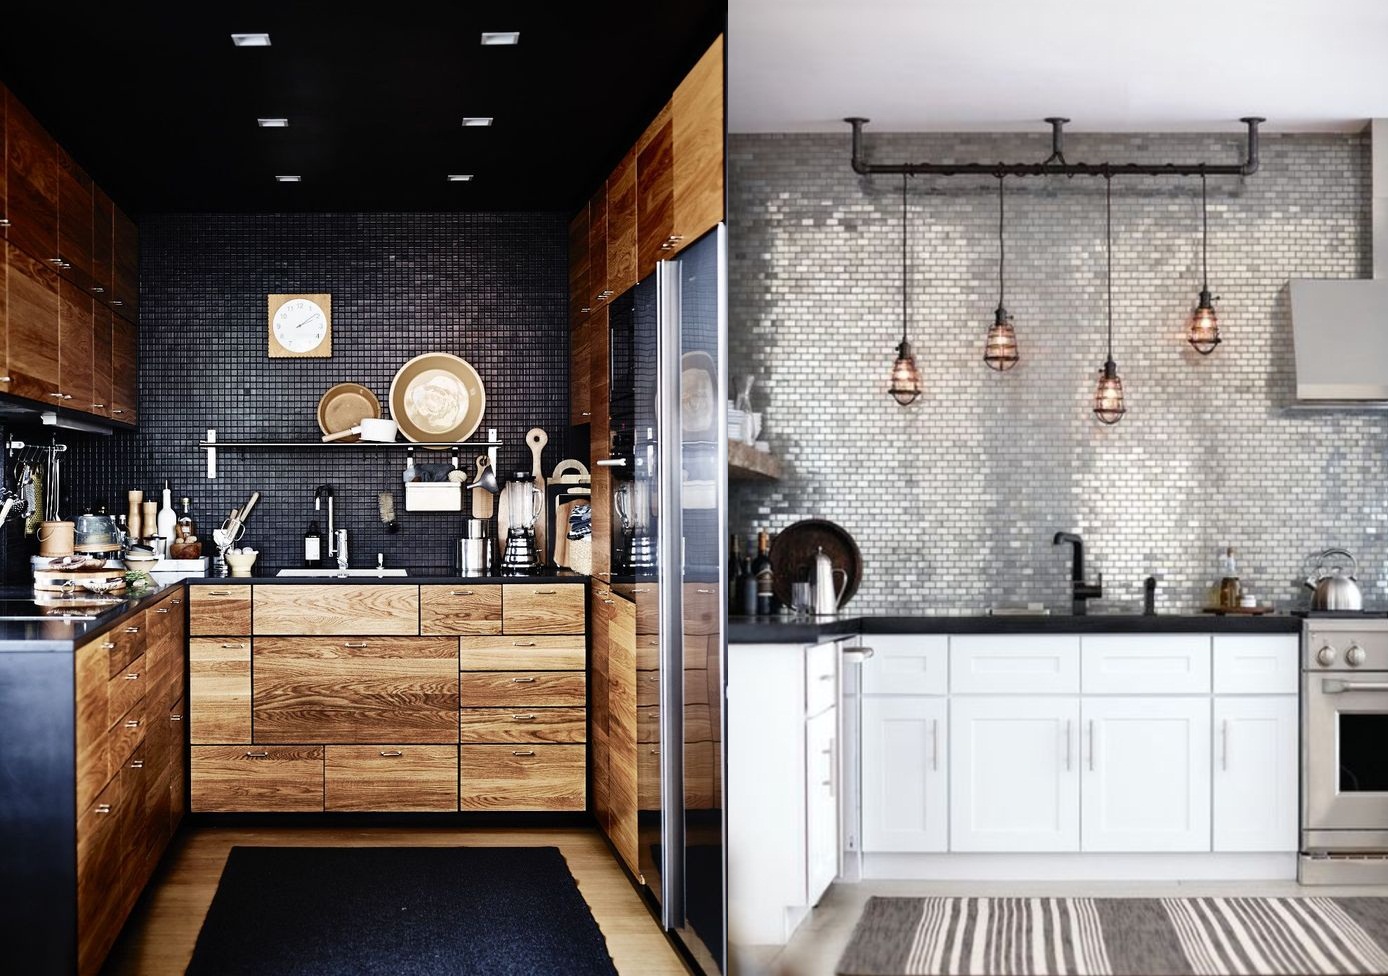 25 Small Kitchen Design Ideas Photo Gallery